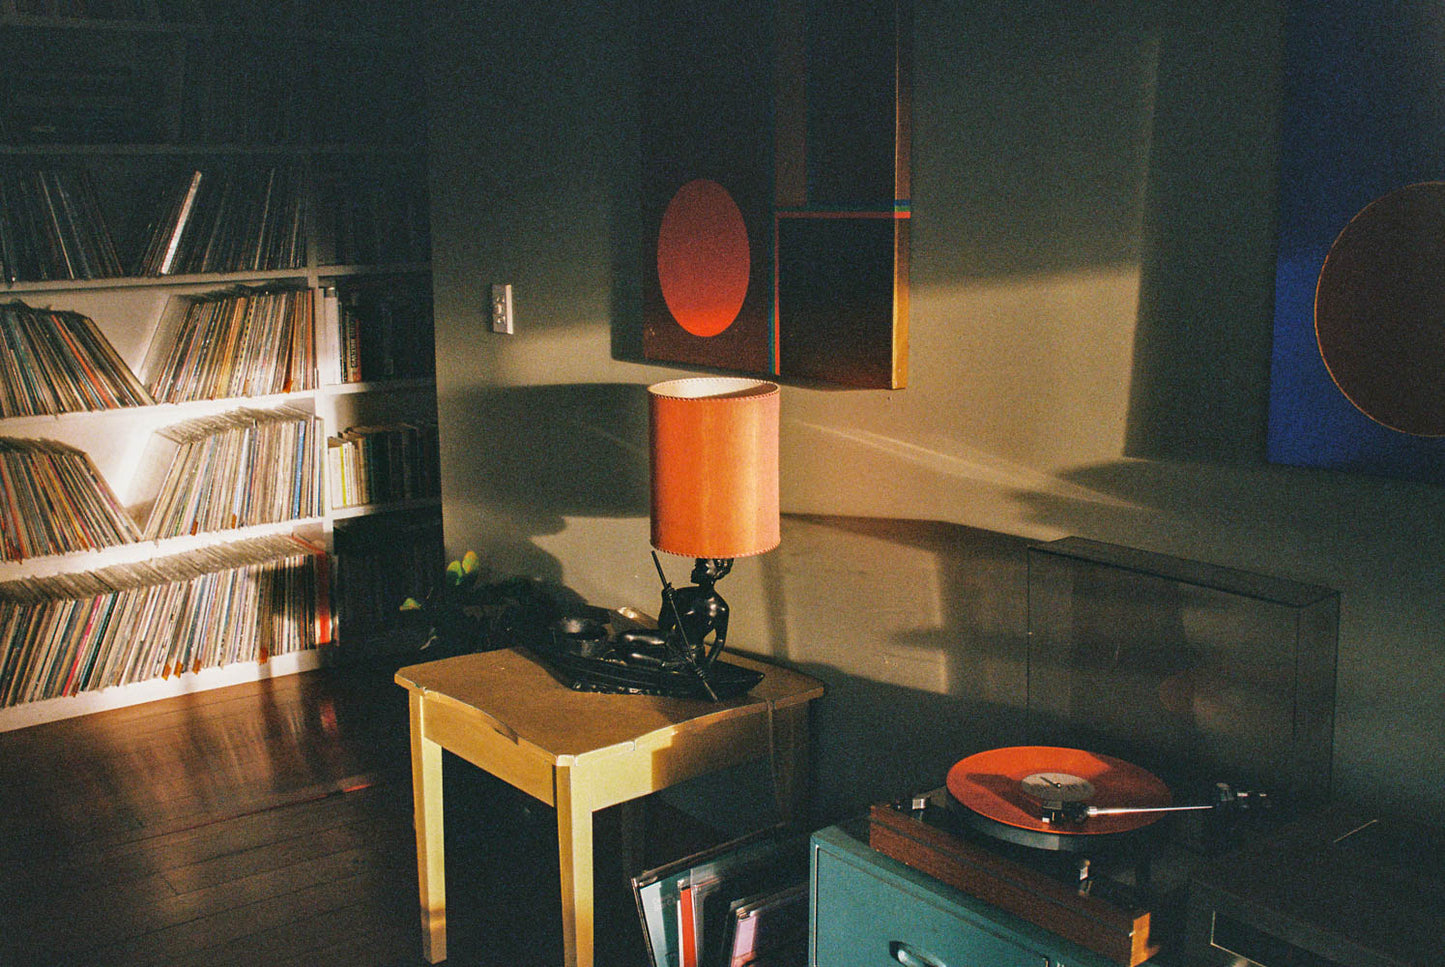  Room Service: CDs & Vinyl